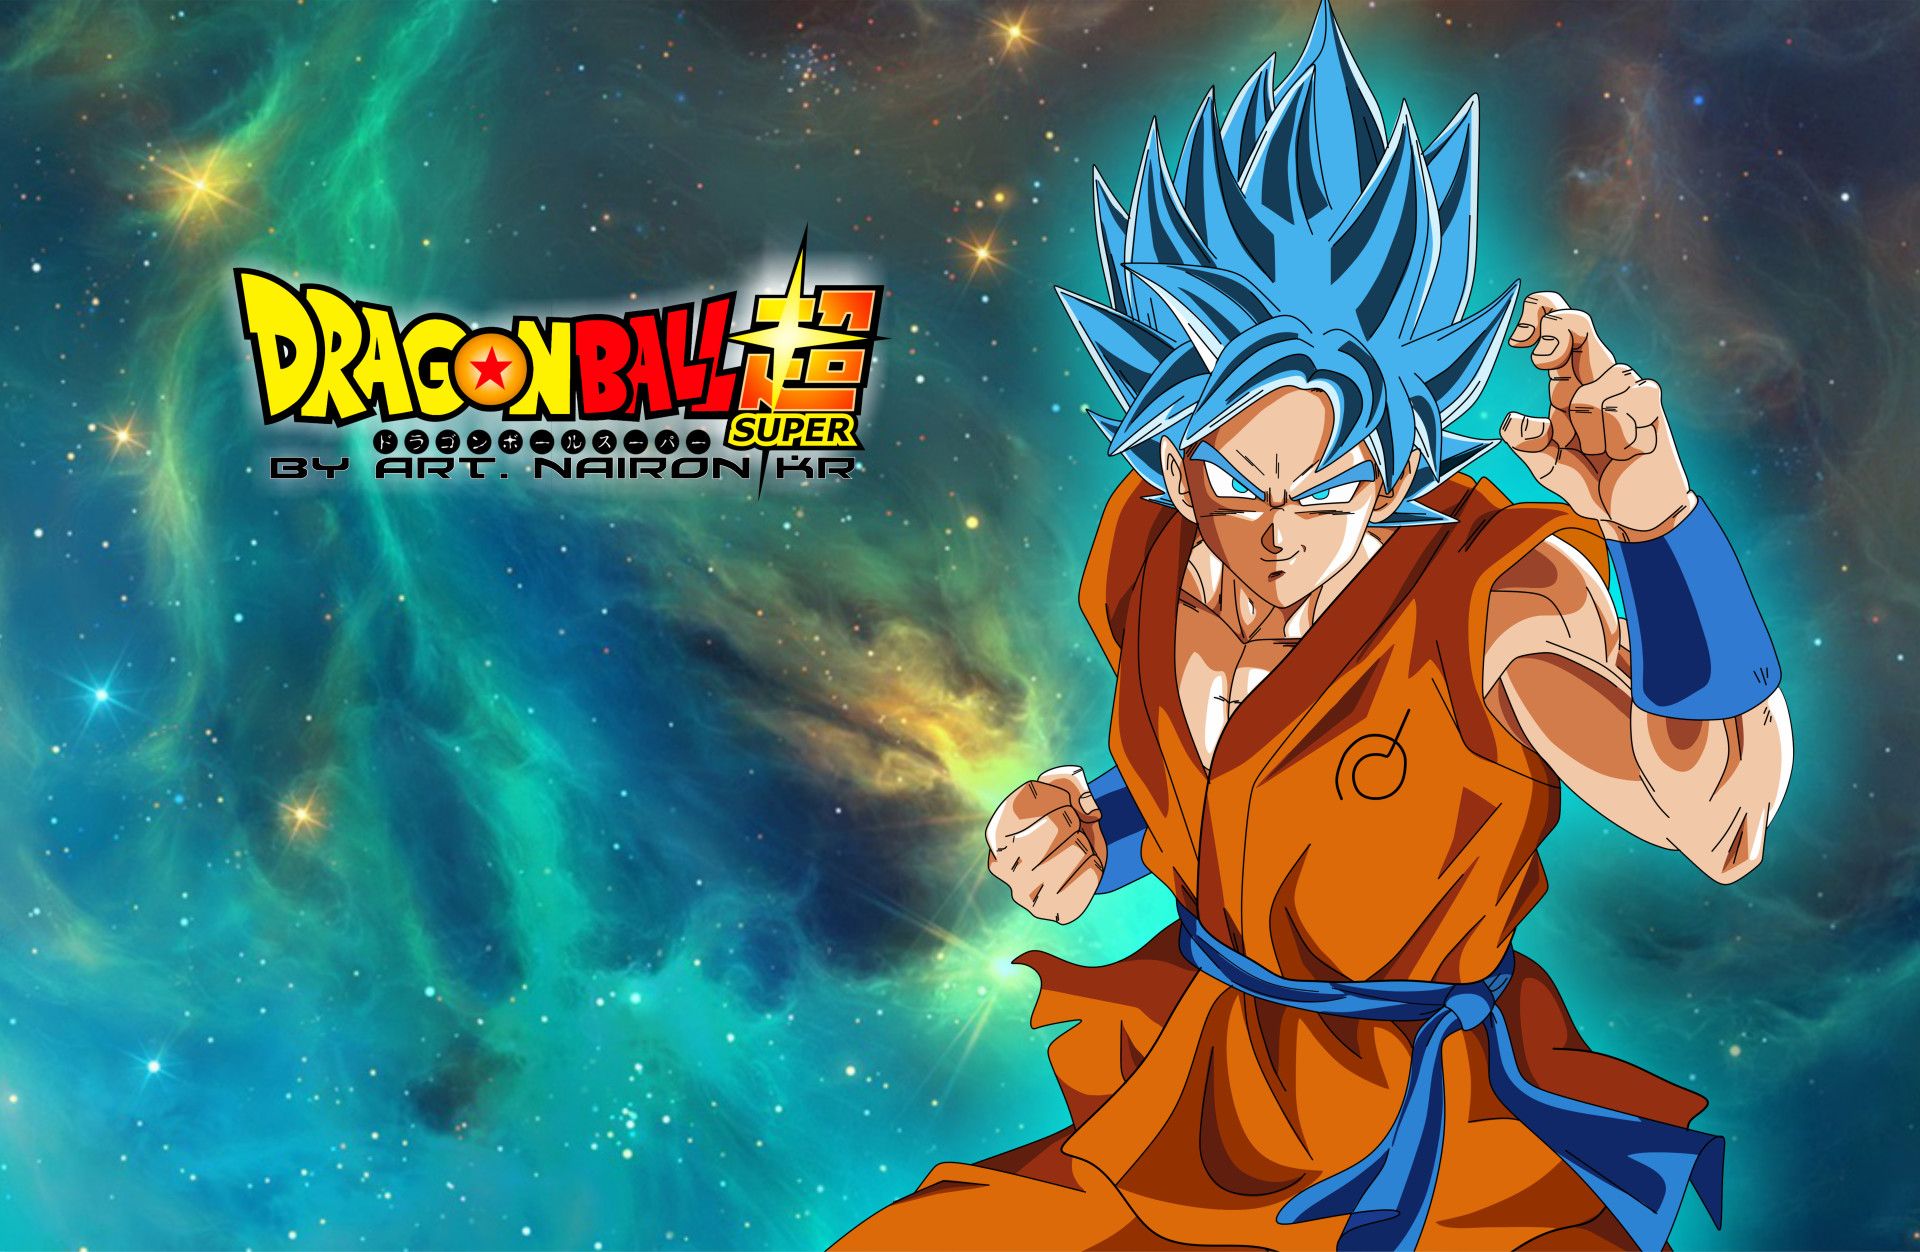 Dragon Ball Z Goku Wallpaper background picture